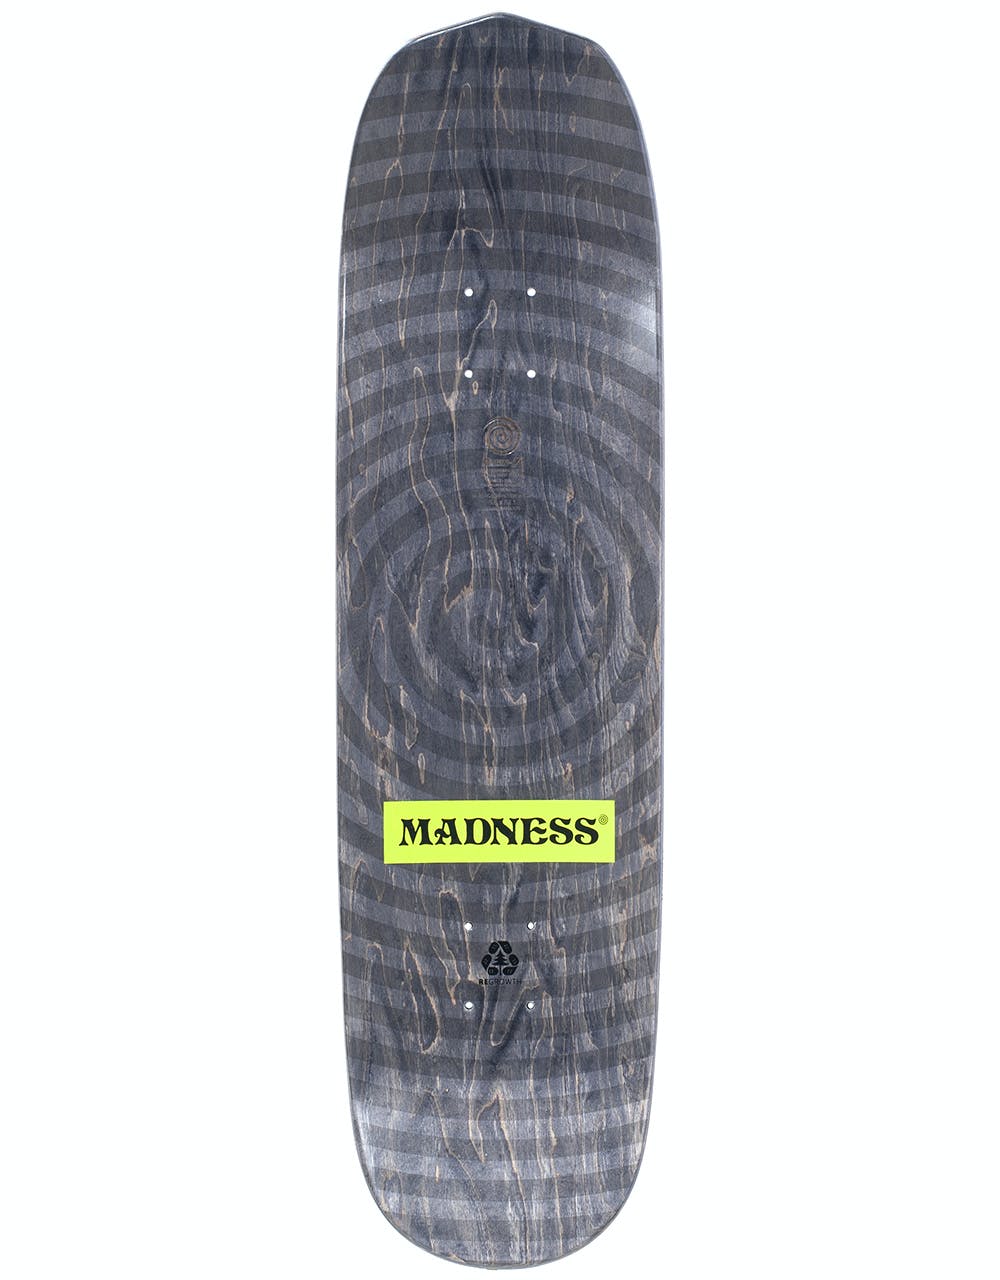 Madness Nohubo Ring 'Slick' Skateboard Deck - 8.5"